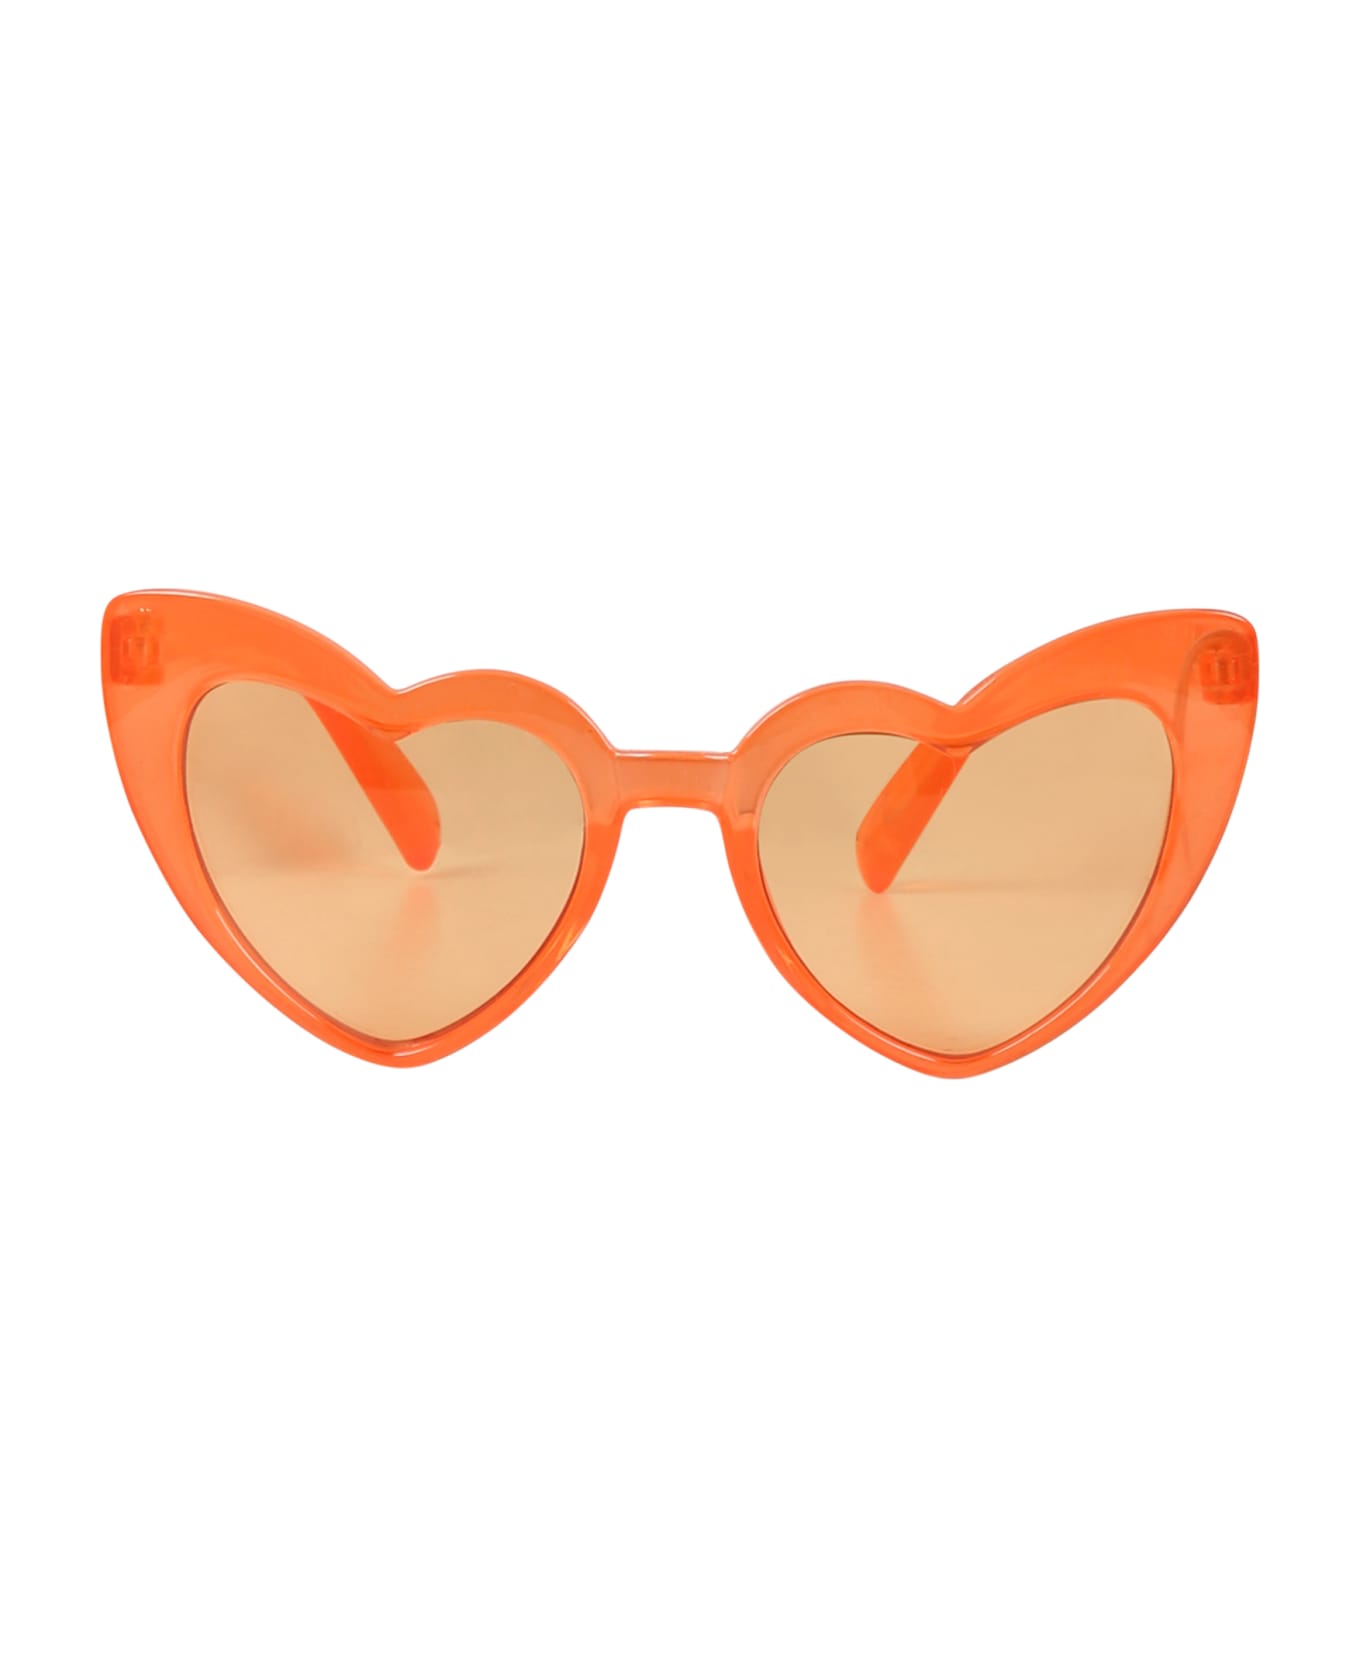 Molo Orange Sana Sunglasses For Girl - Orange アクセサリー＆ギフト